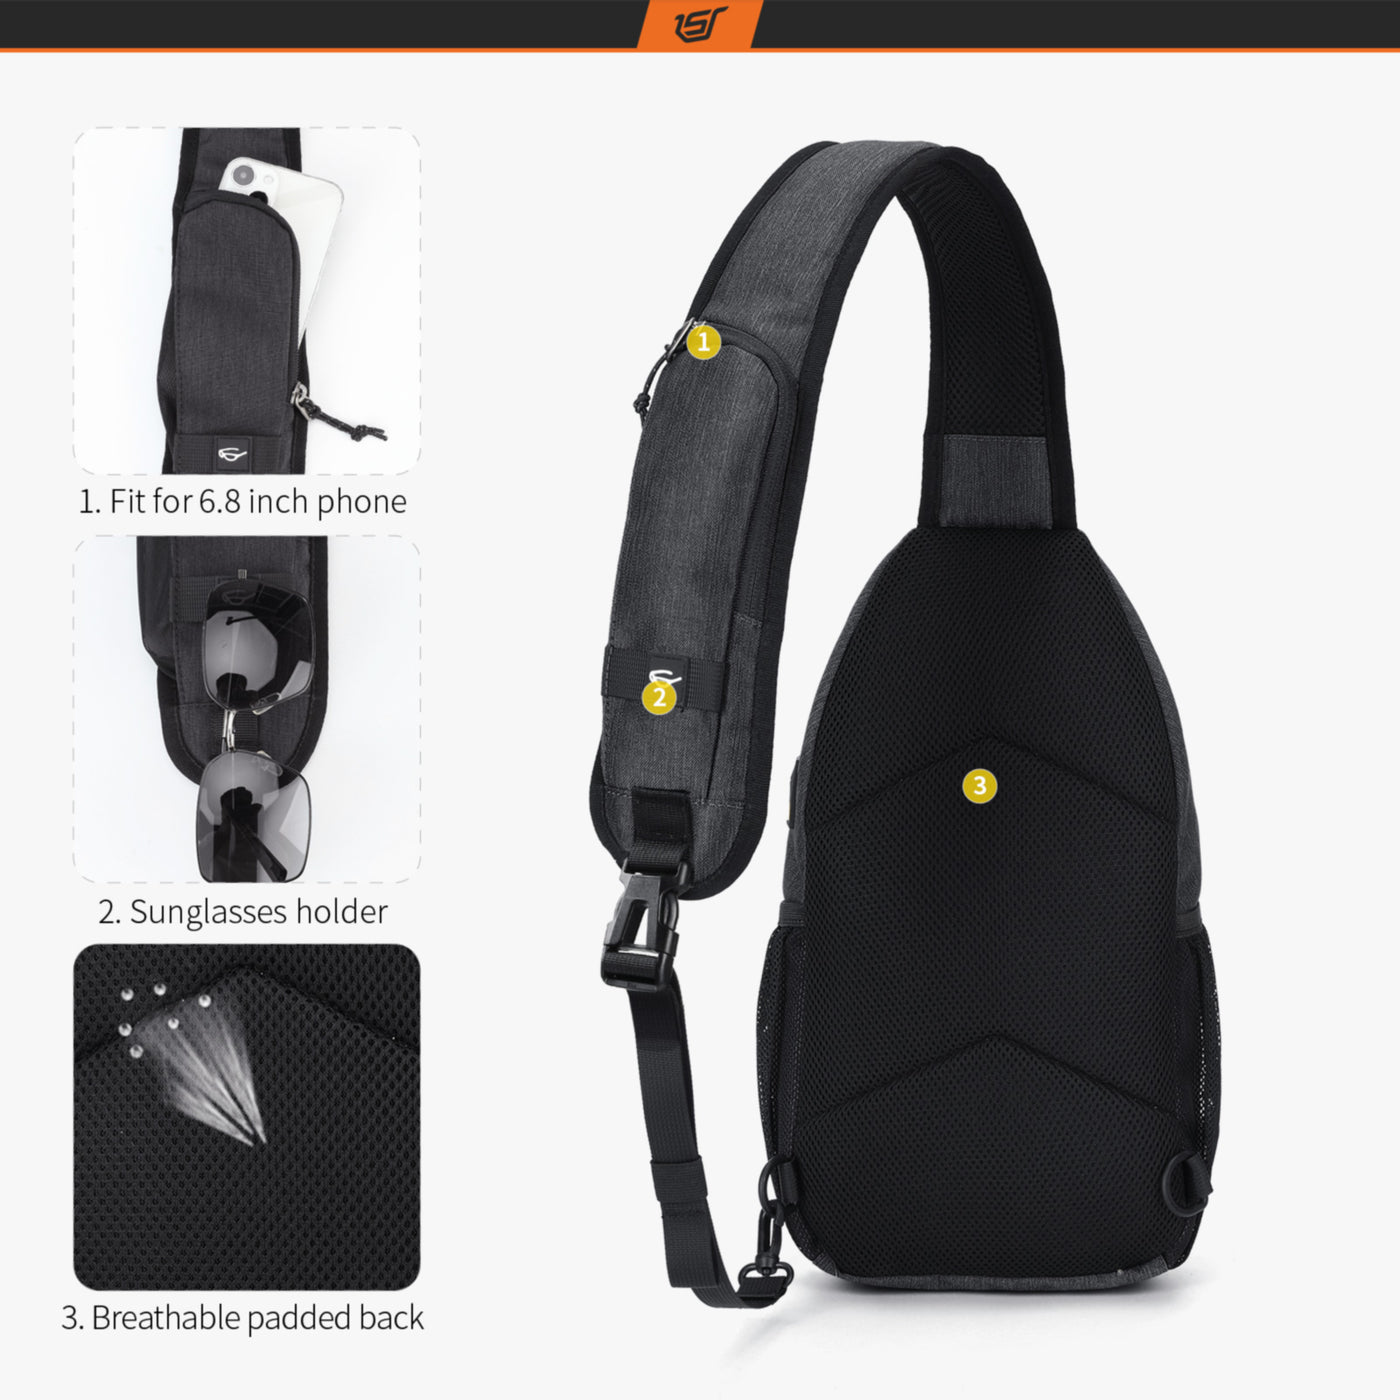 Urban X6 - SKYSPER 6L Sling Bag Crossbody Daypack Chest Bag